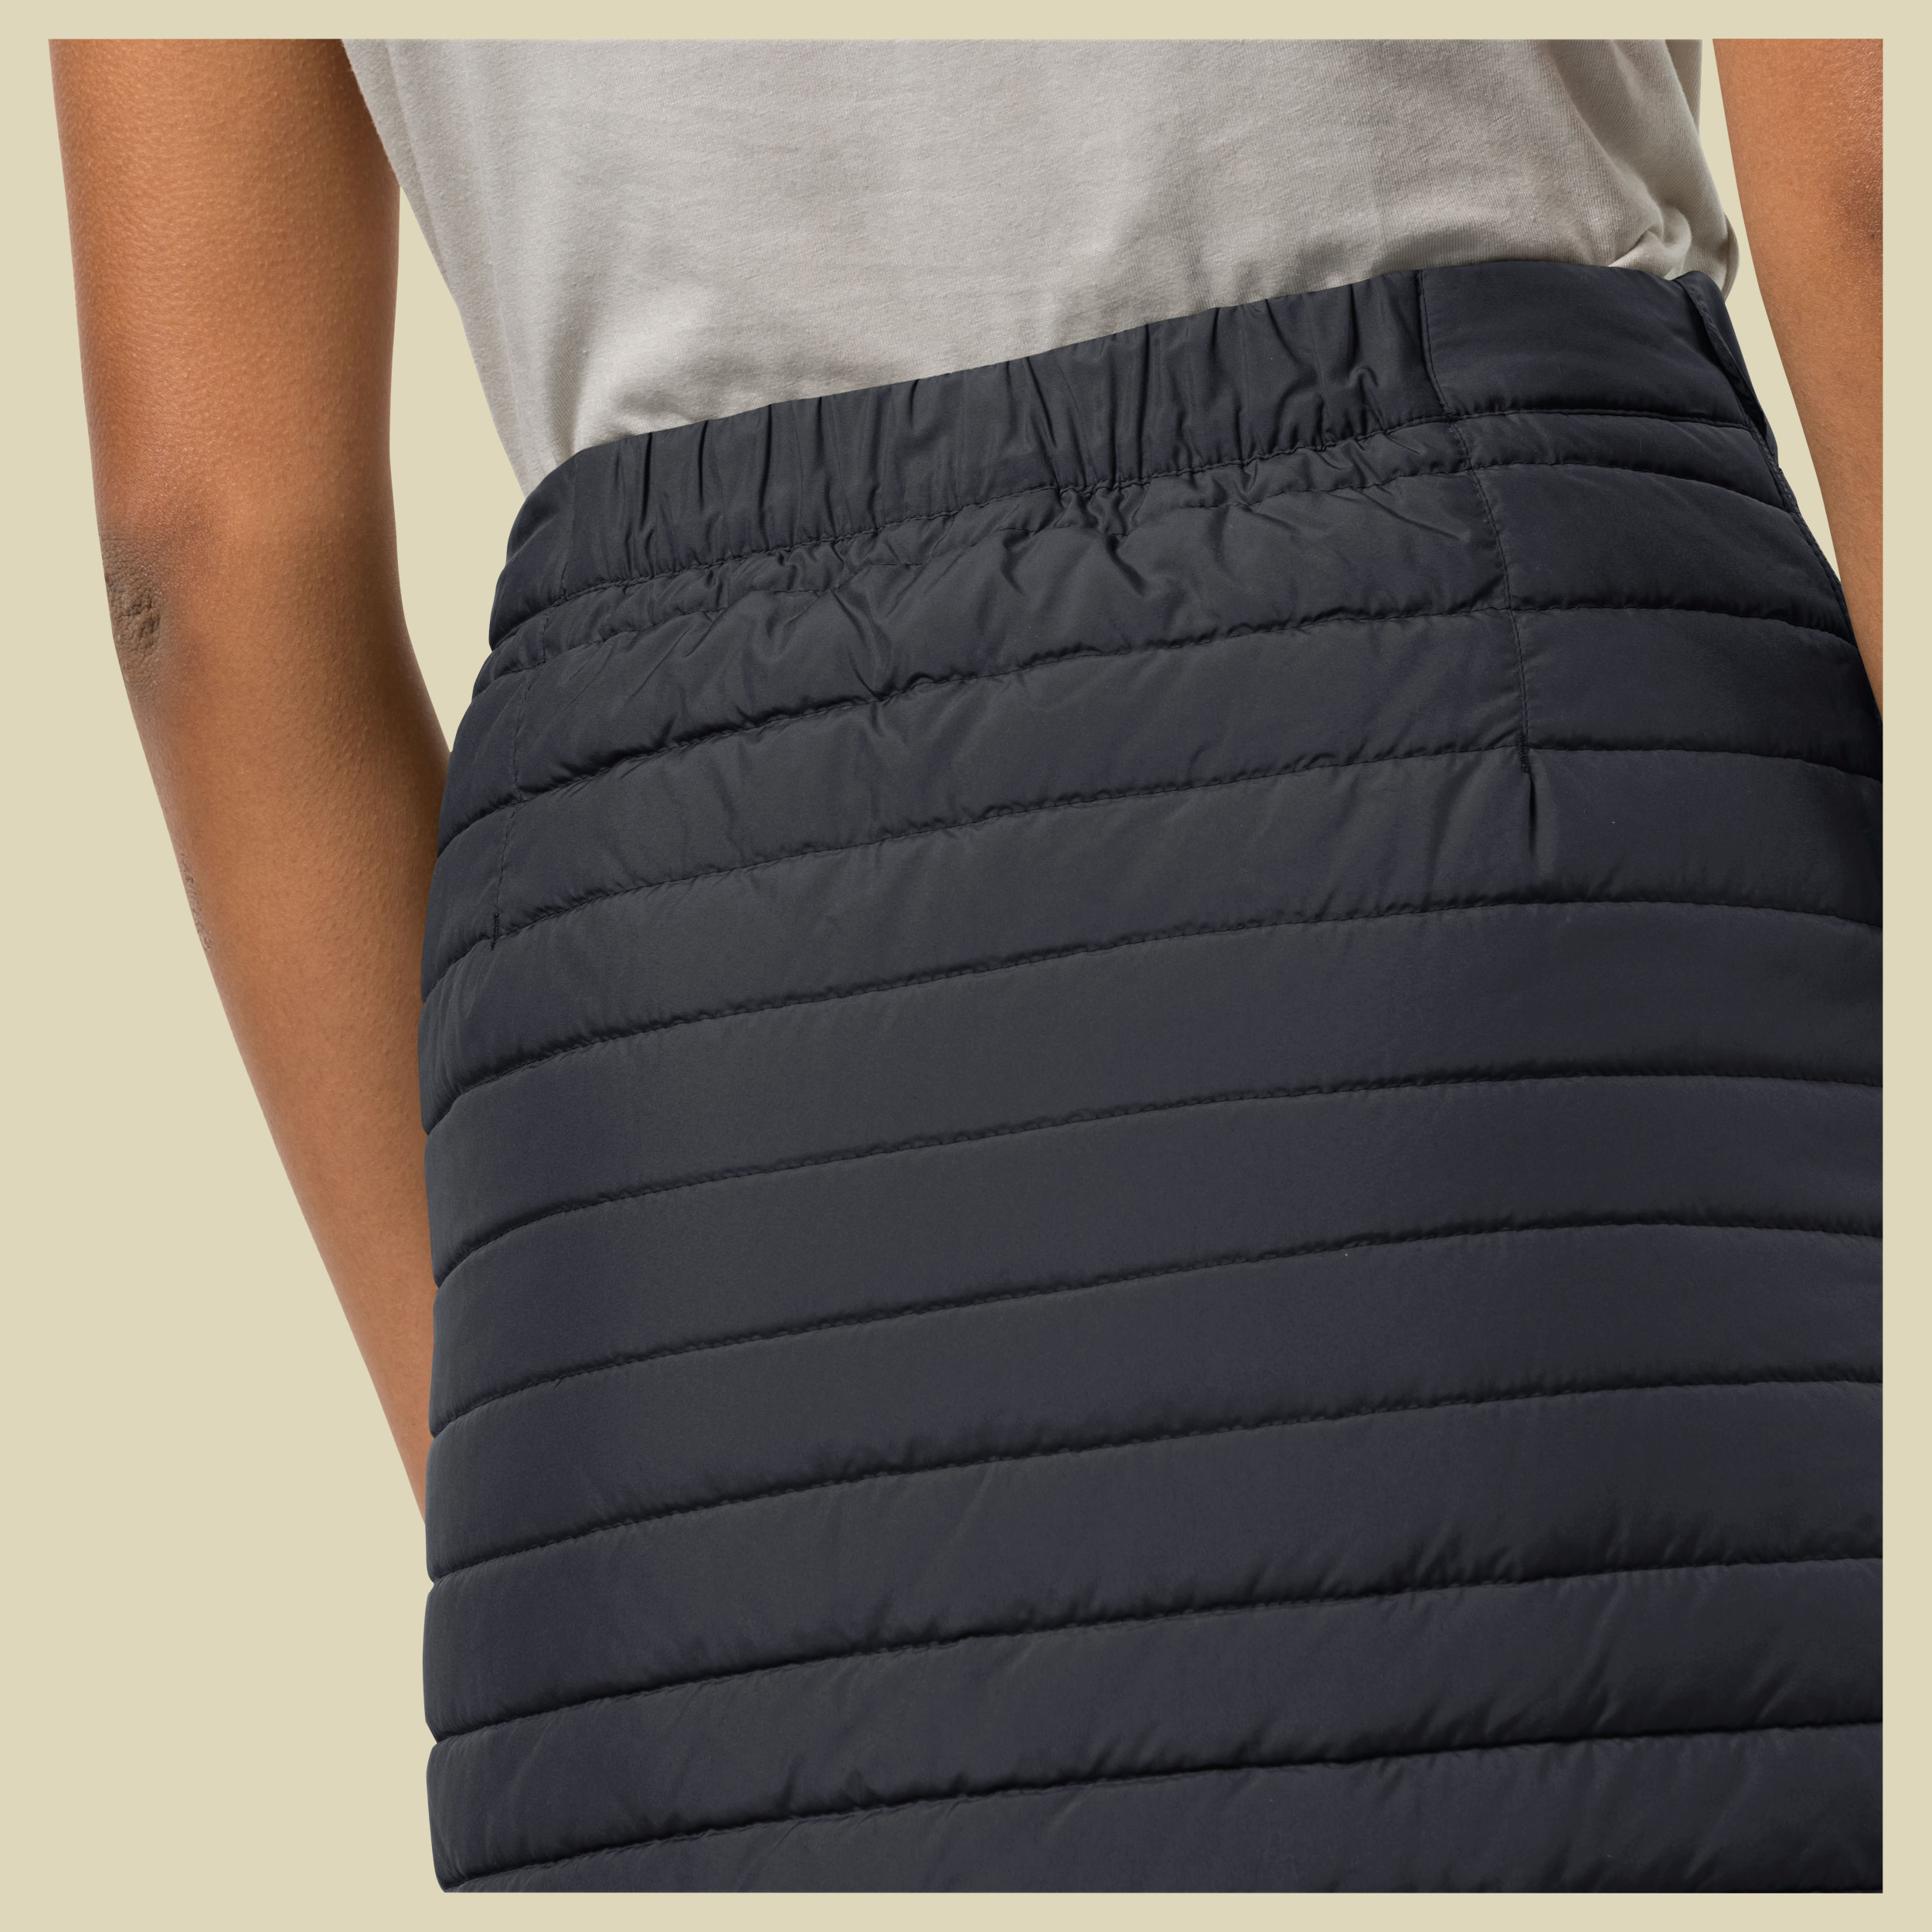 Iceguard Skirt  Größe L  Farbe phantom